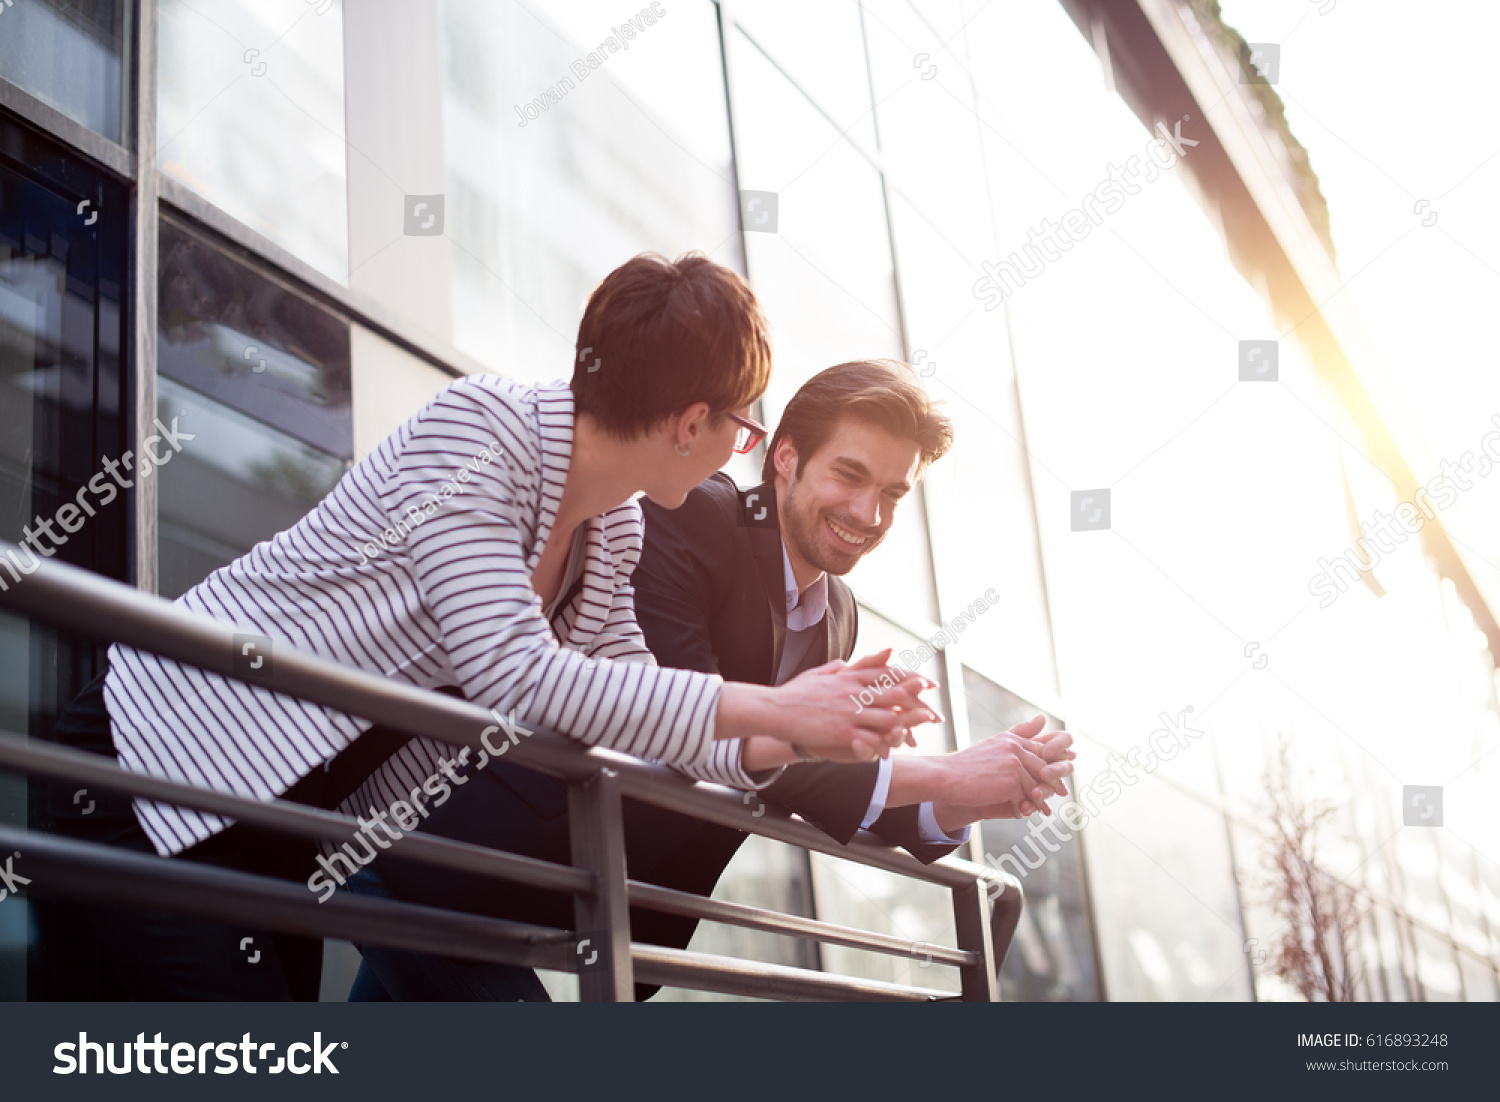 Businessman explains something to businesswoman on balcony #616893248